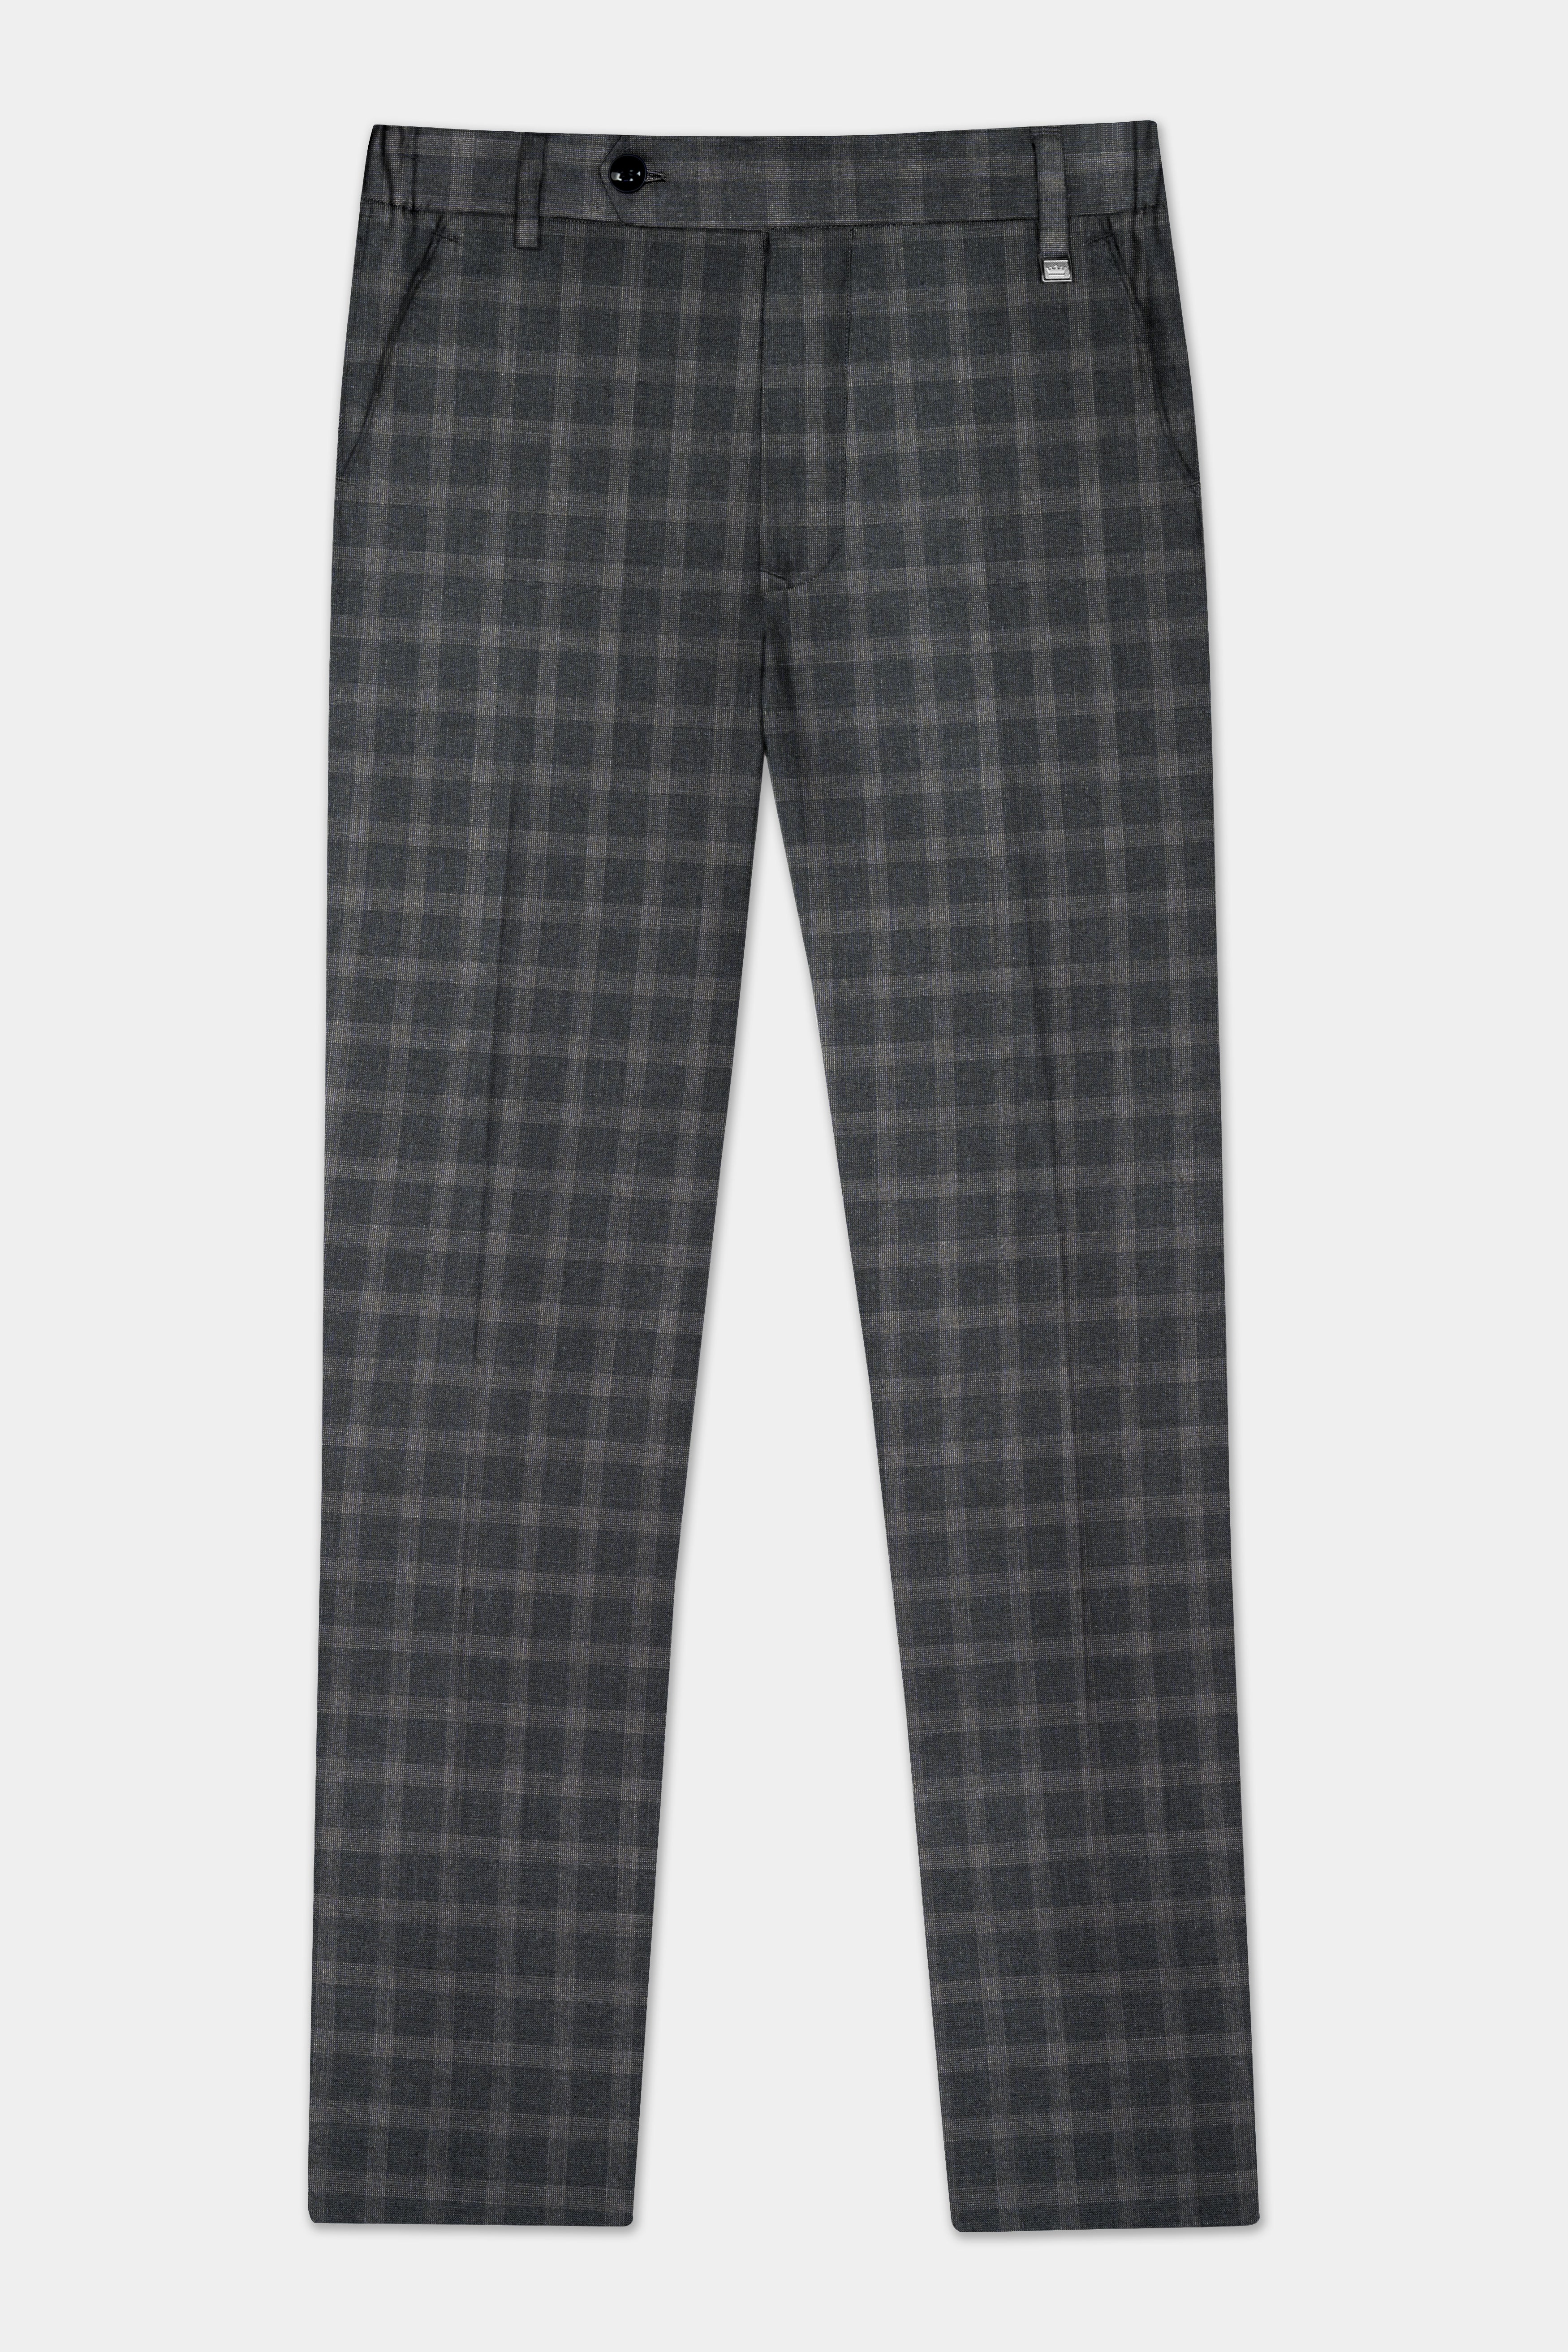 Gravel Gray Checkered Wool Blend Pant